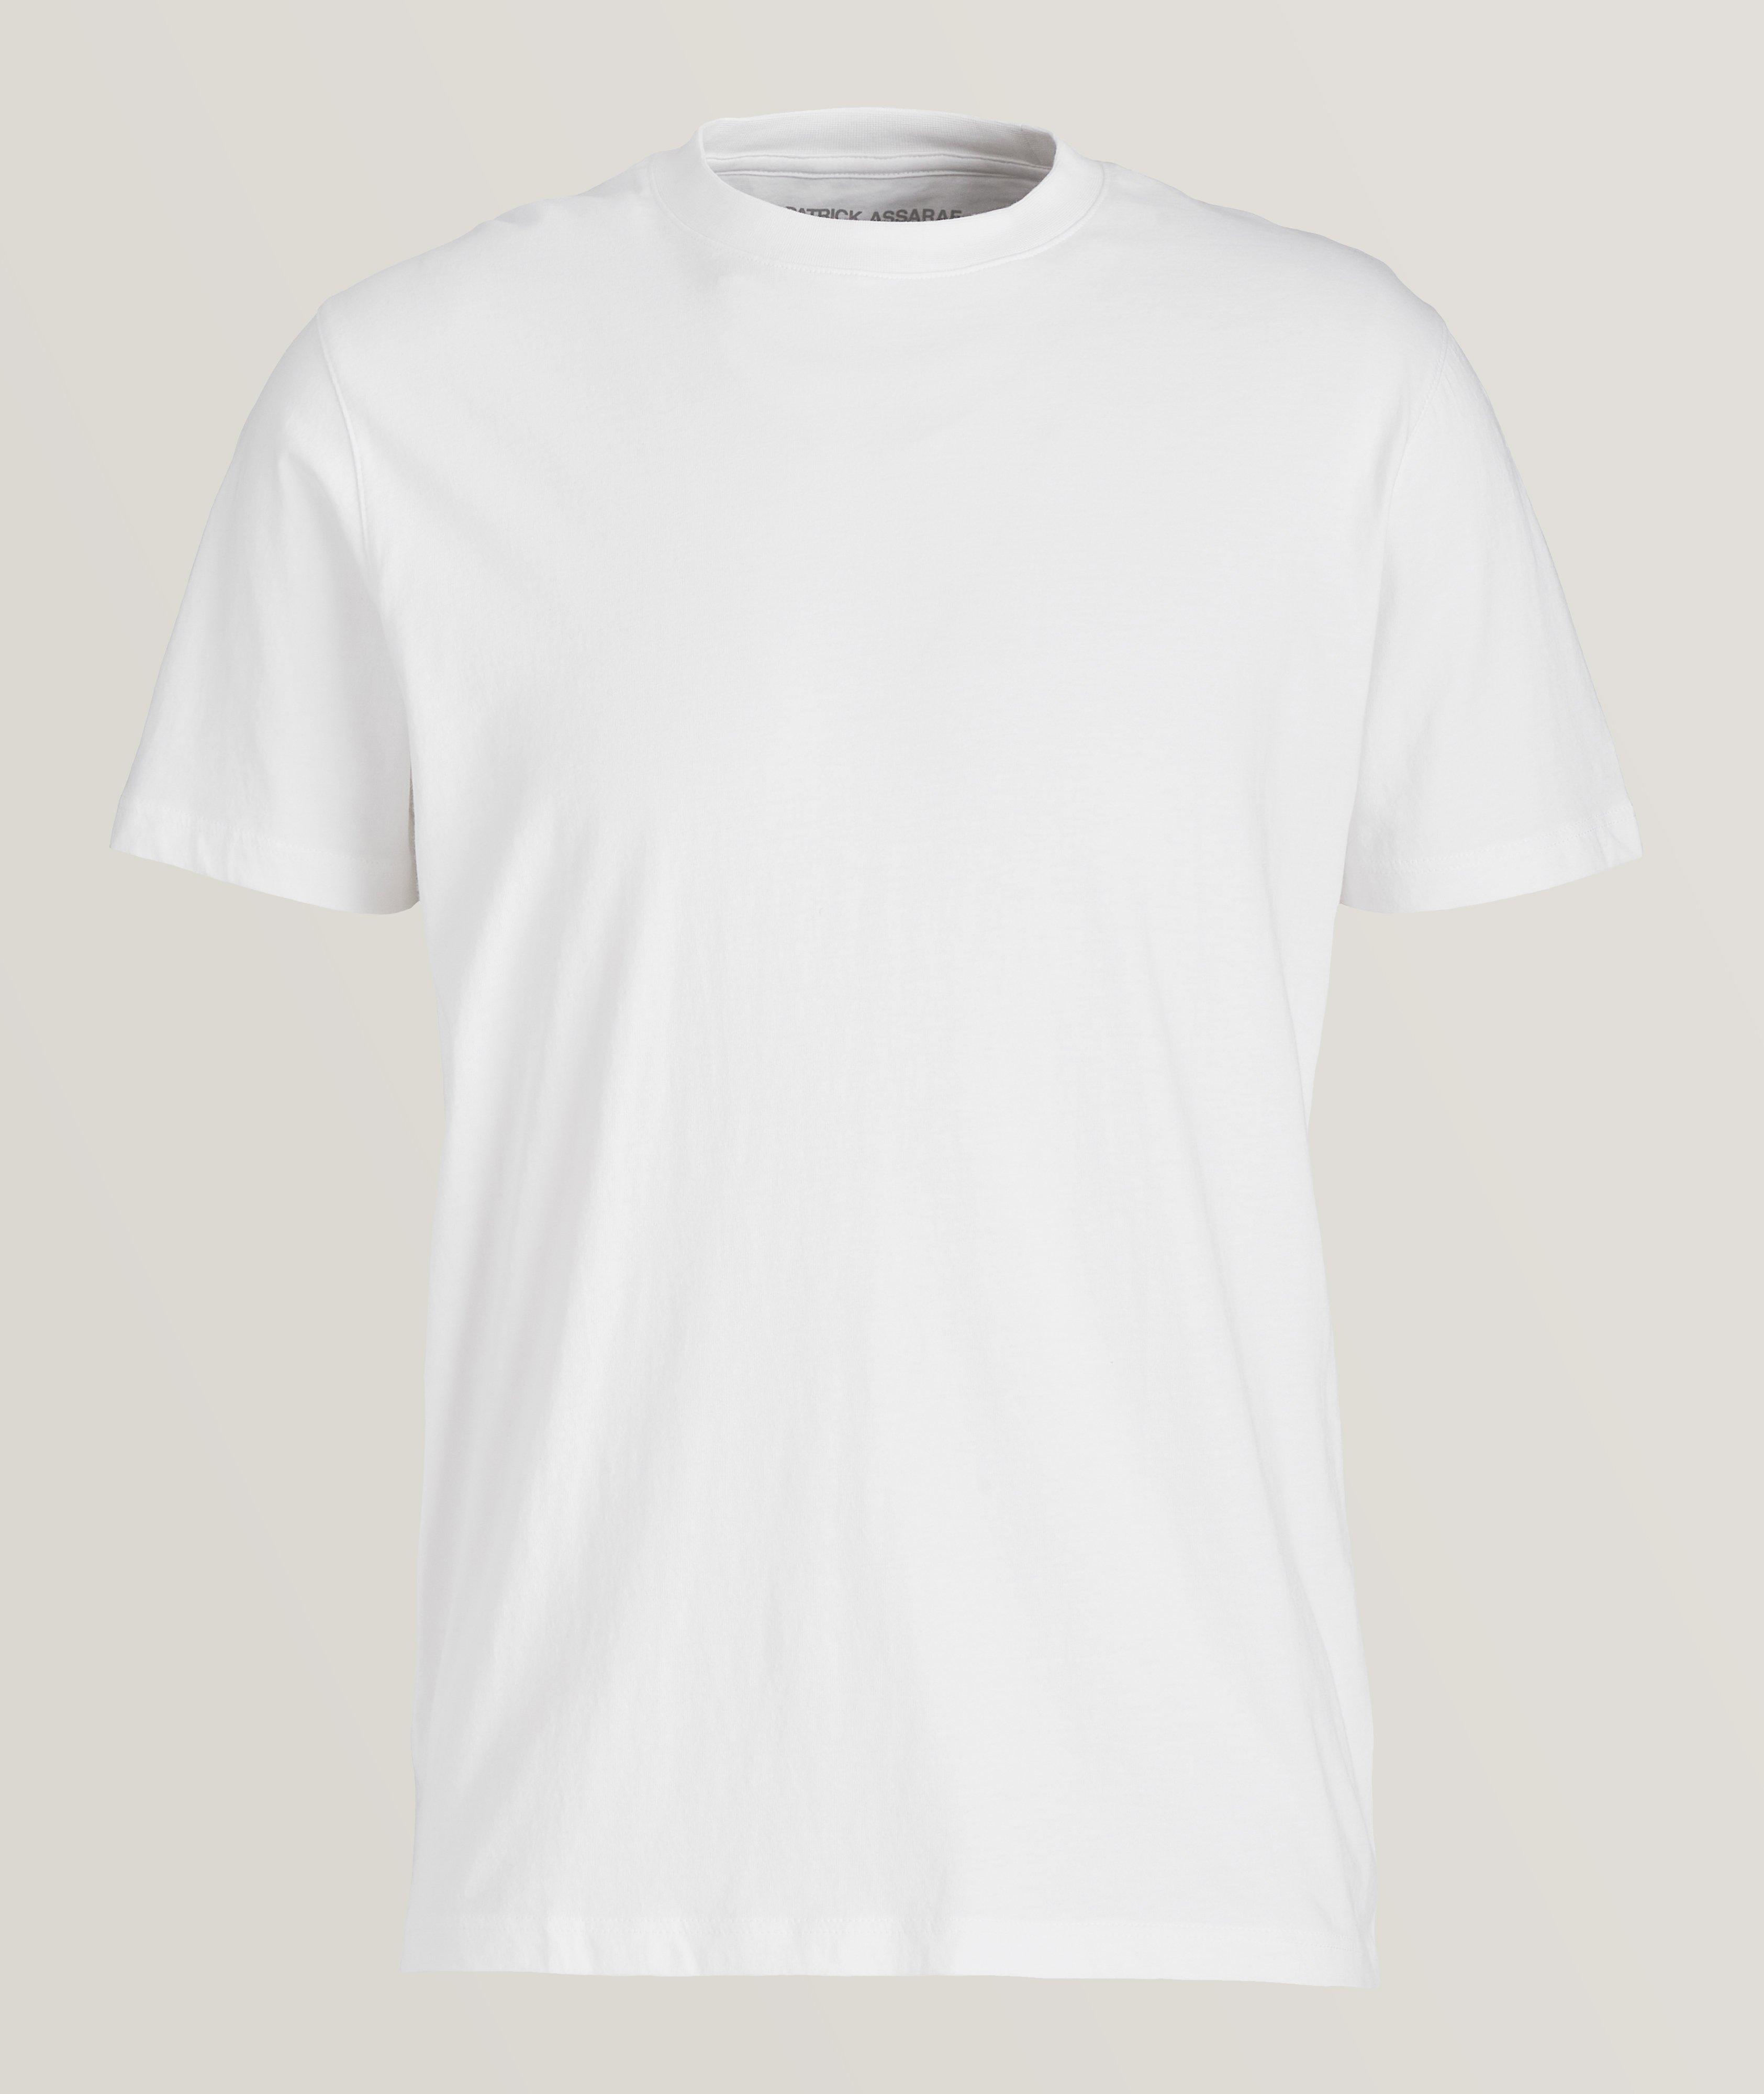 Patrick Assaraf Organic Pima Cotton Crewneck T-Shirt